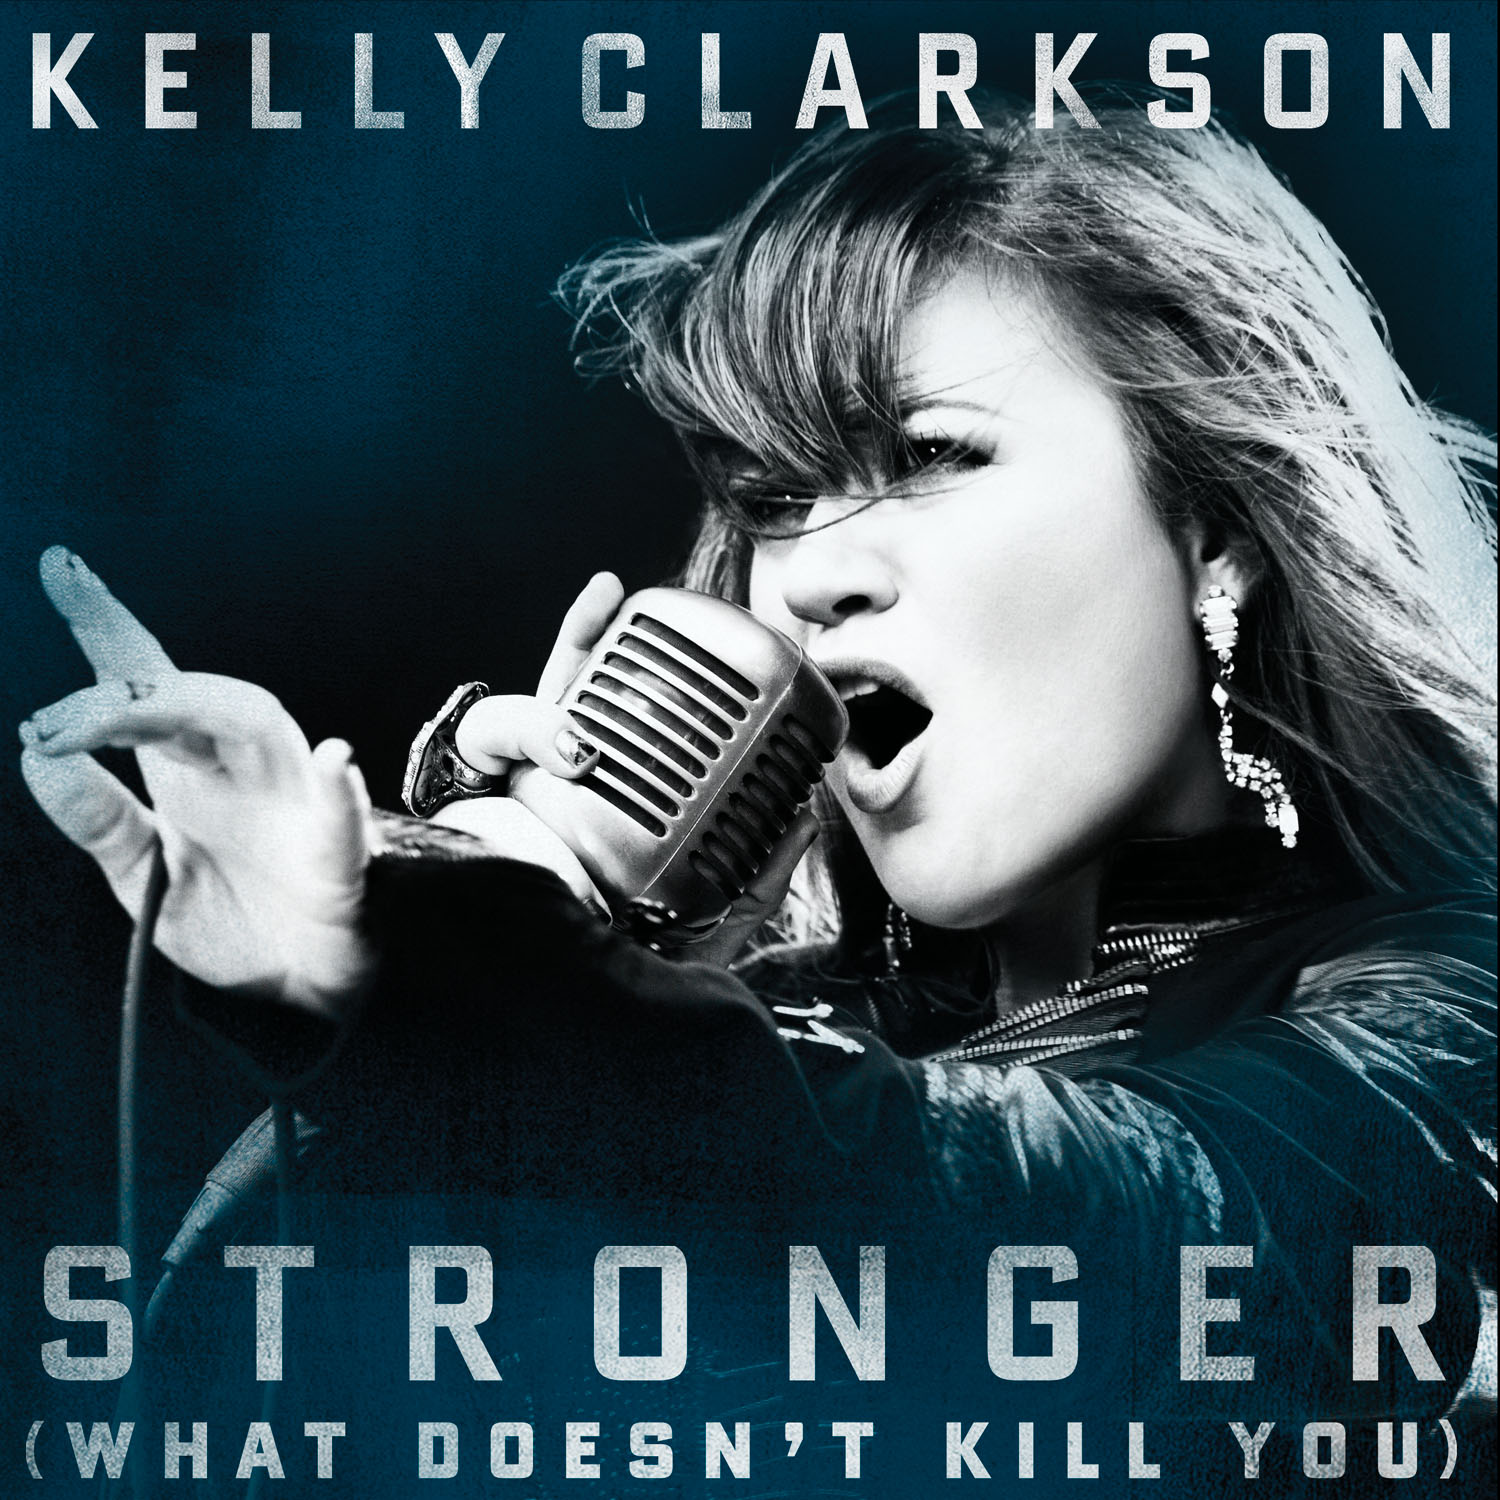 http://3.bp.blogspot.com/-ynUxhCzO1Jw/UN9SIfQj6AI/AAAAAAAAHzs/bSfLMWSCEX4/s1600/Kelly-Clarkson-What-Doesnt-Kill-You.jpg